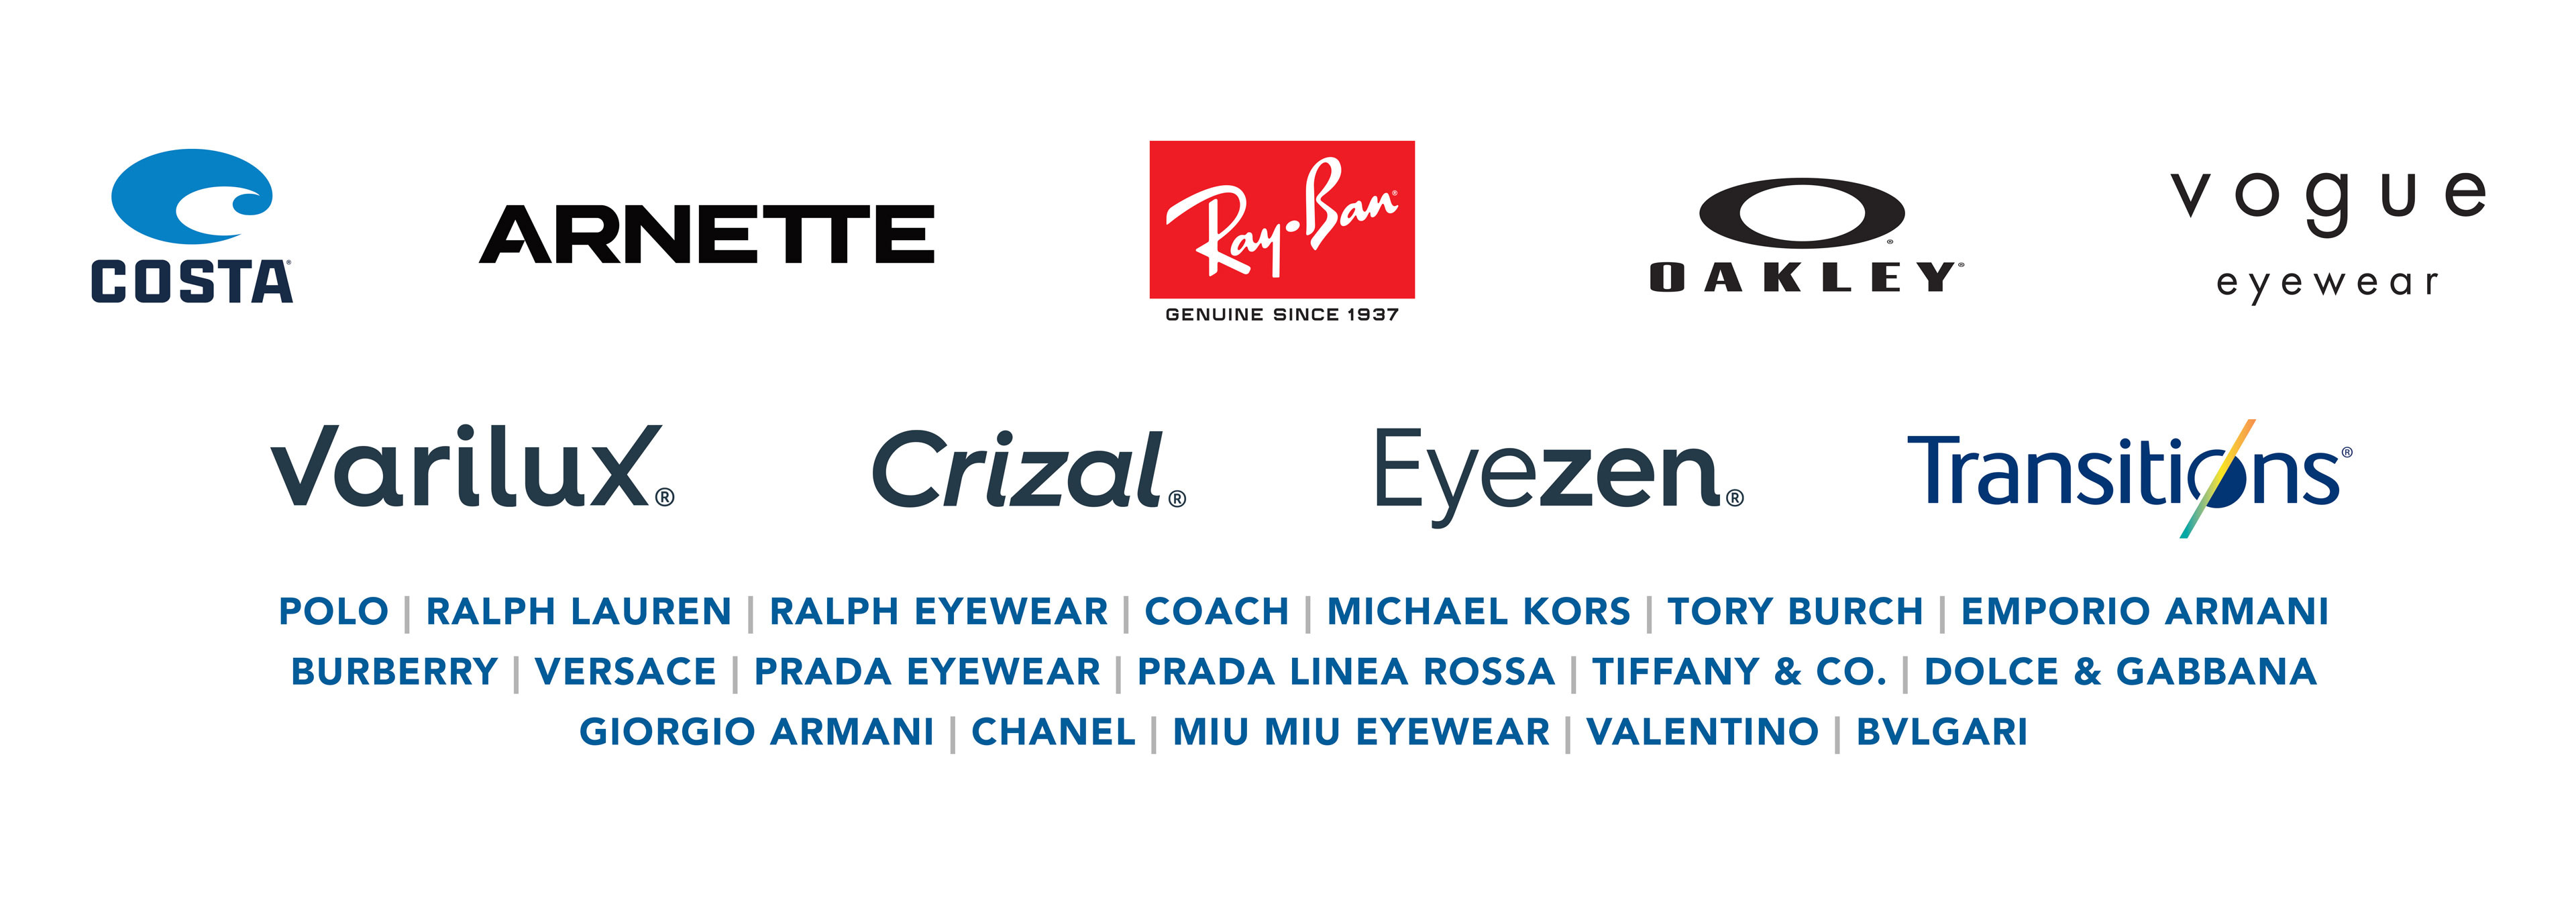 Costa. Arnette. Oakley. Ray-Ban. Vogue. Eyewear. Varilux. Eyezen. Transitions. Crizal.